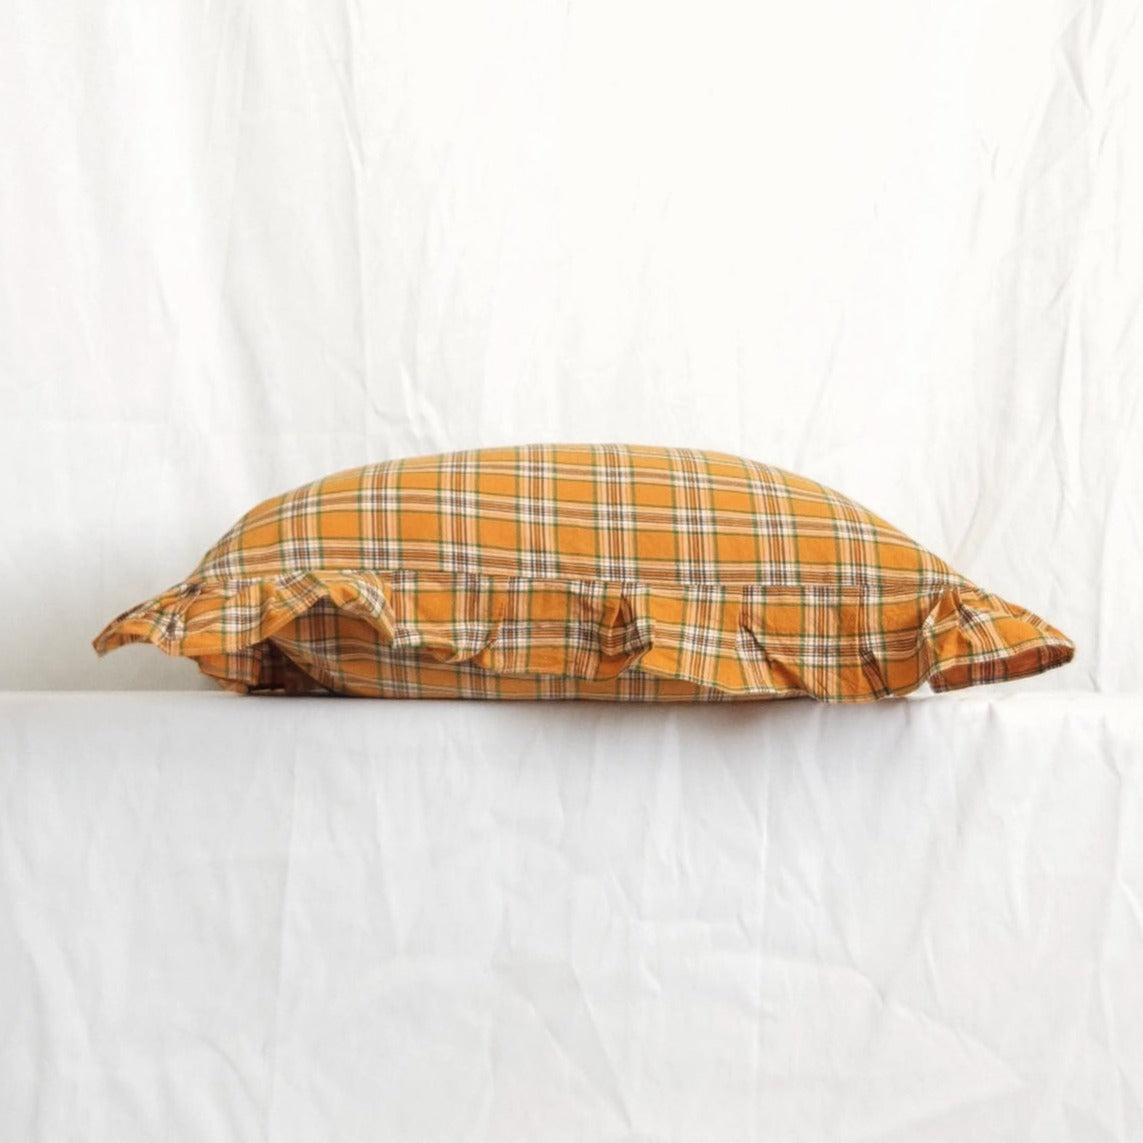 Sarah Burnt Orange Throw Pillow Cover 20x20 Plaid Pillow Ruffle Farmhouse Pillow Cotton | Dusk & Bloom